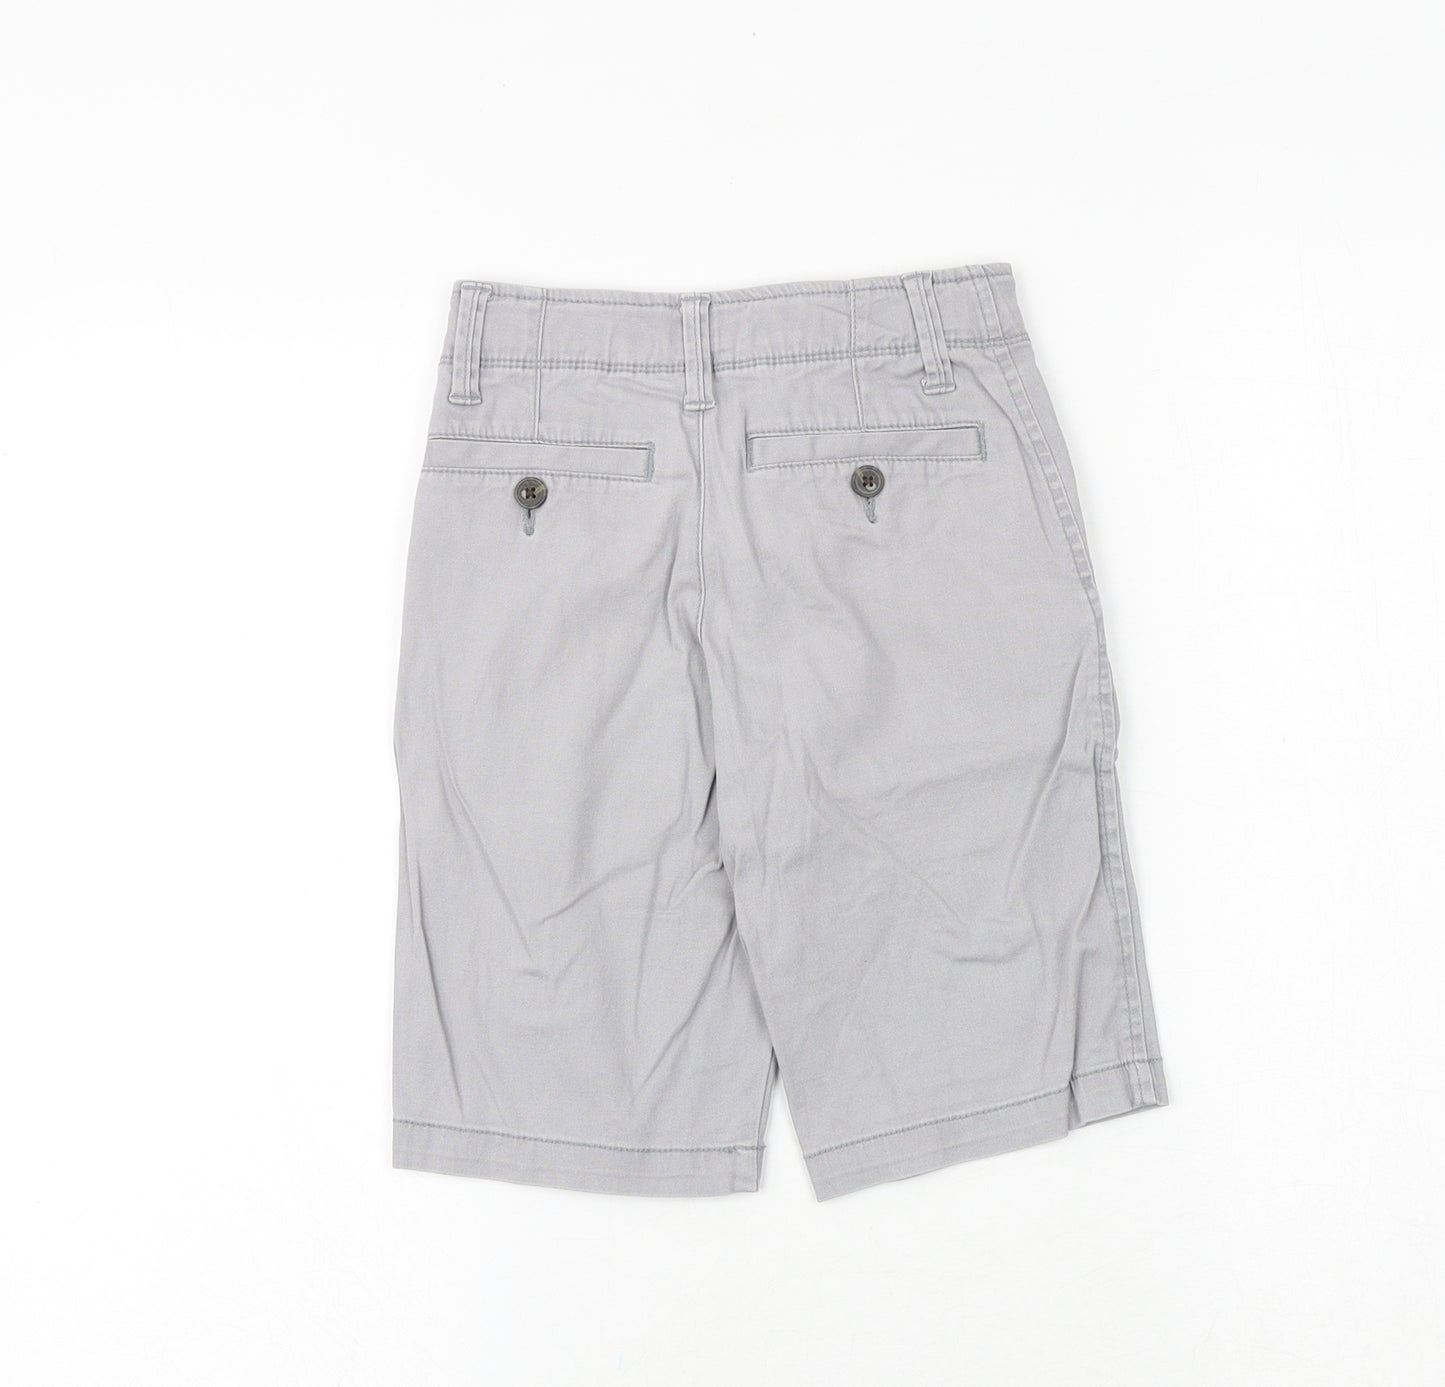 AriZona Boys Grey 100% Cotton Chino Shorts Size 8 Years Regular Zip